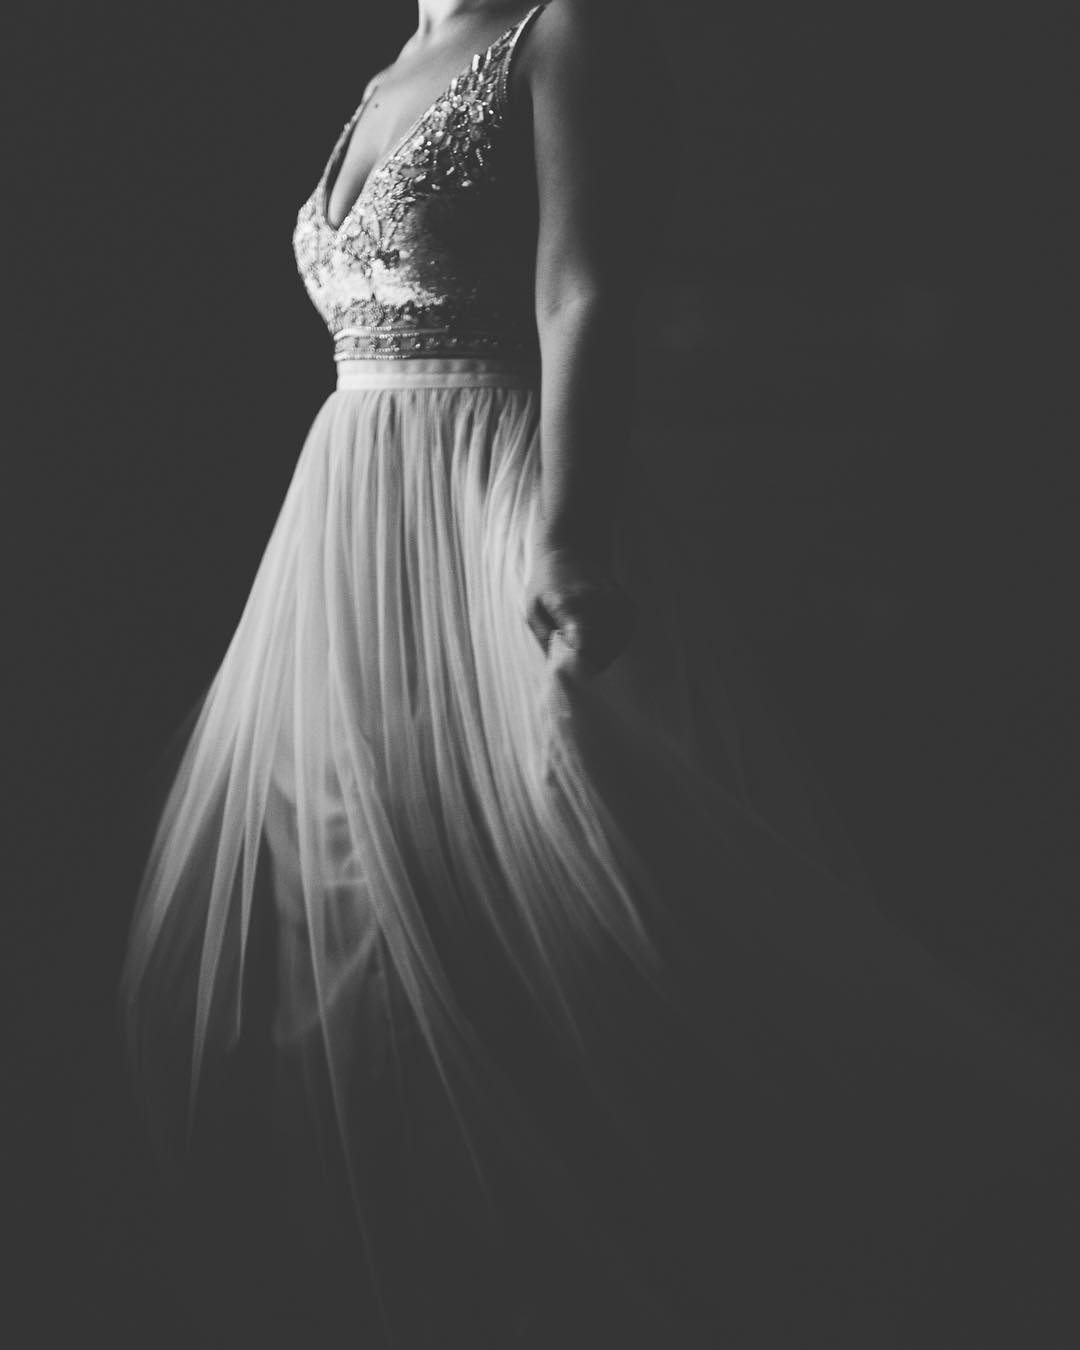 A monochrome image a bride wearing a wedding dress